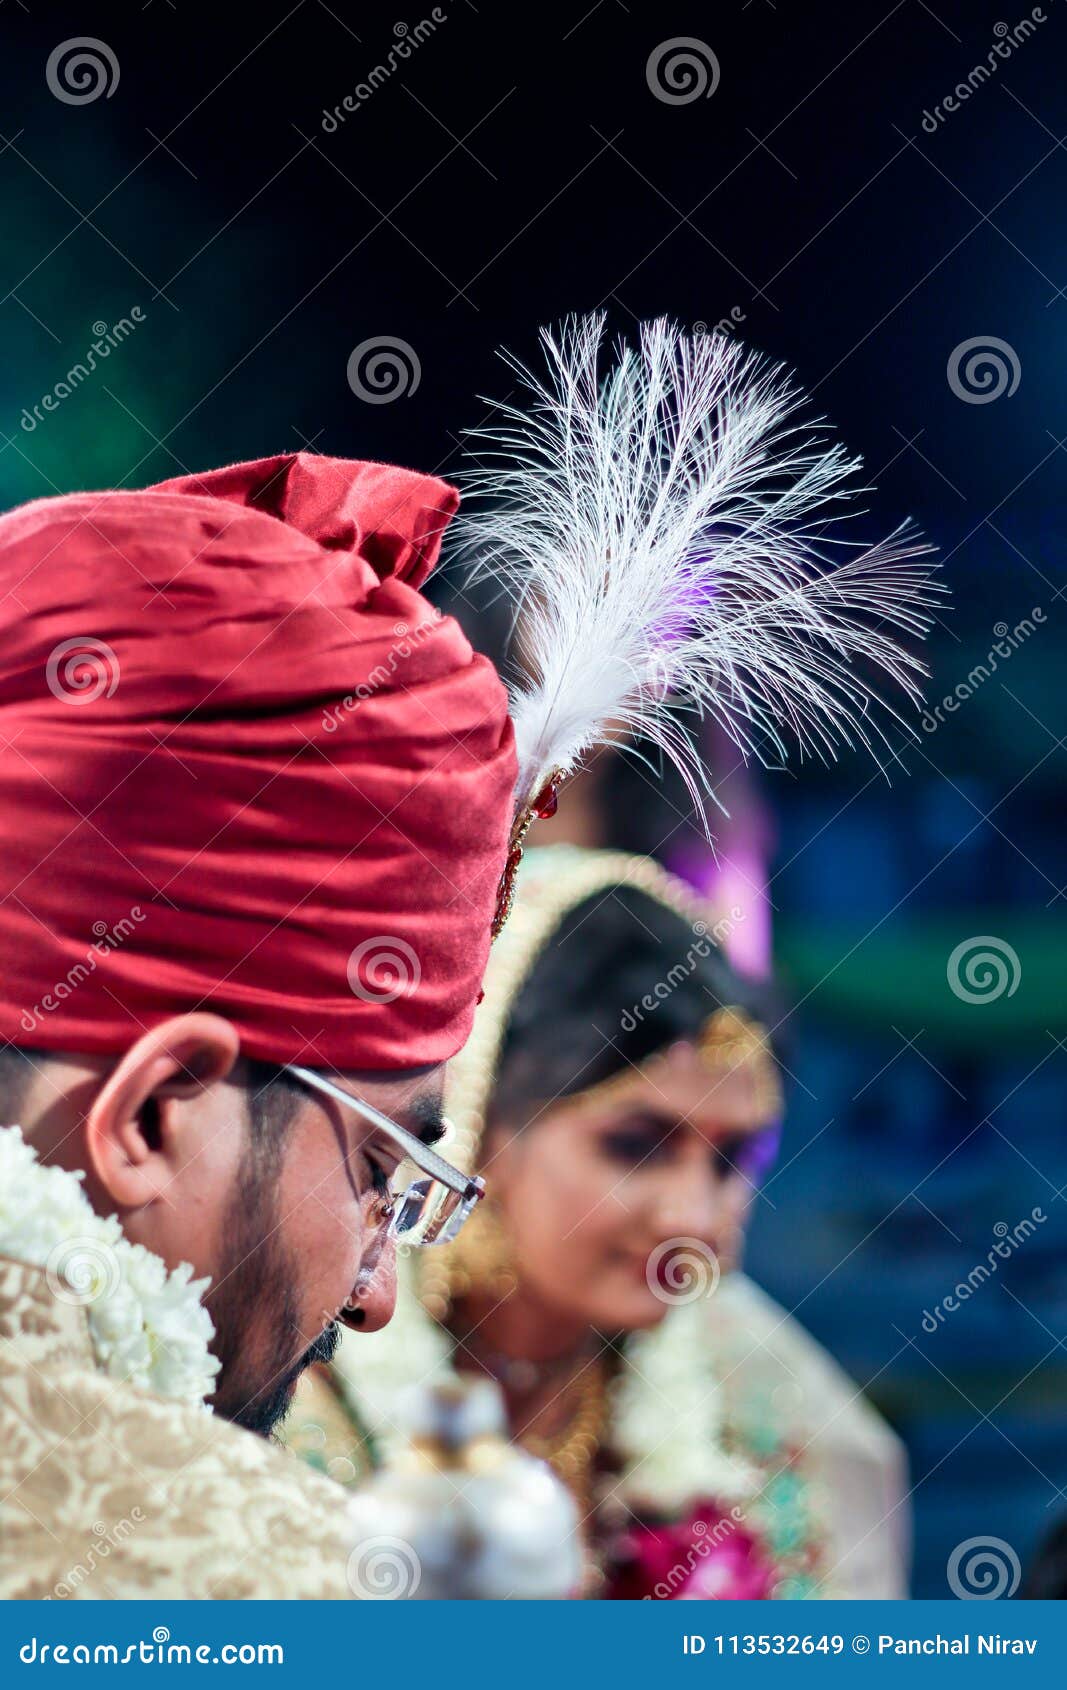 Pin by Patelmahesh on mahesh | Indian wedding poses, Indian bride  photography poses, Groom dress men